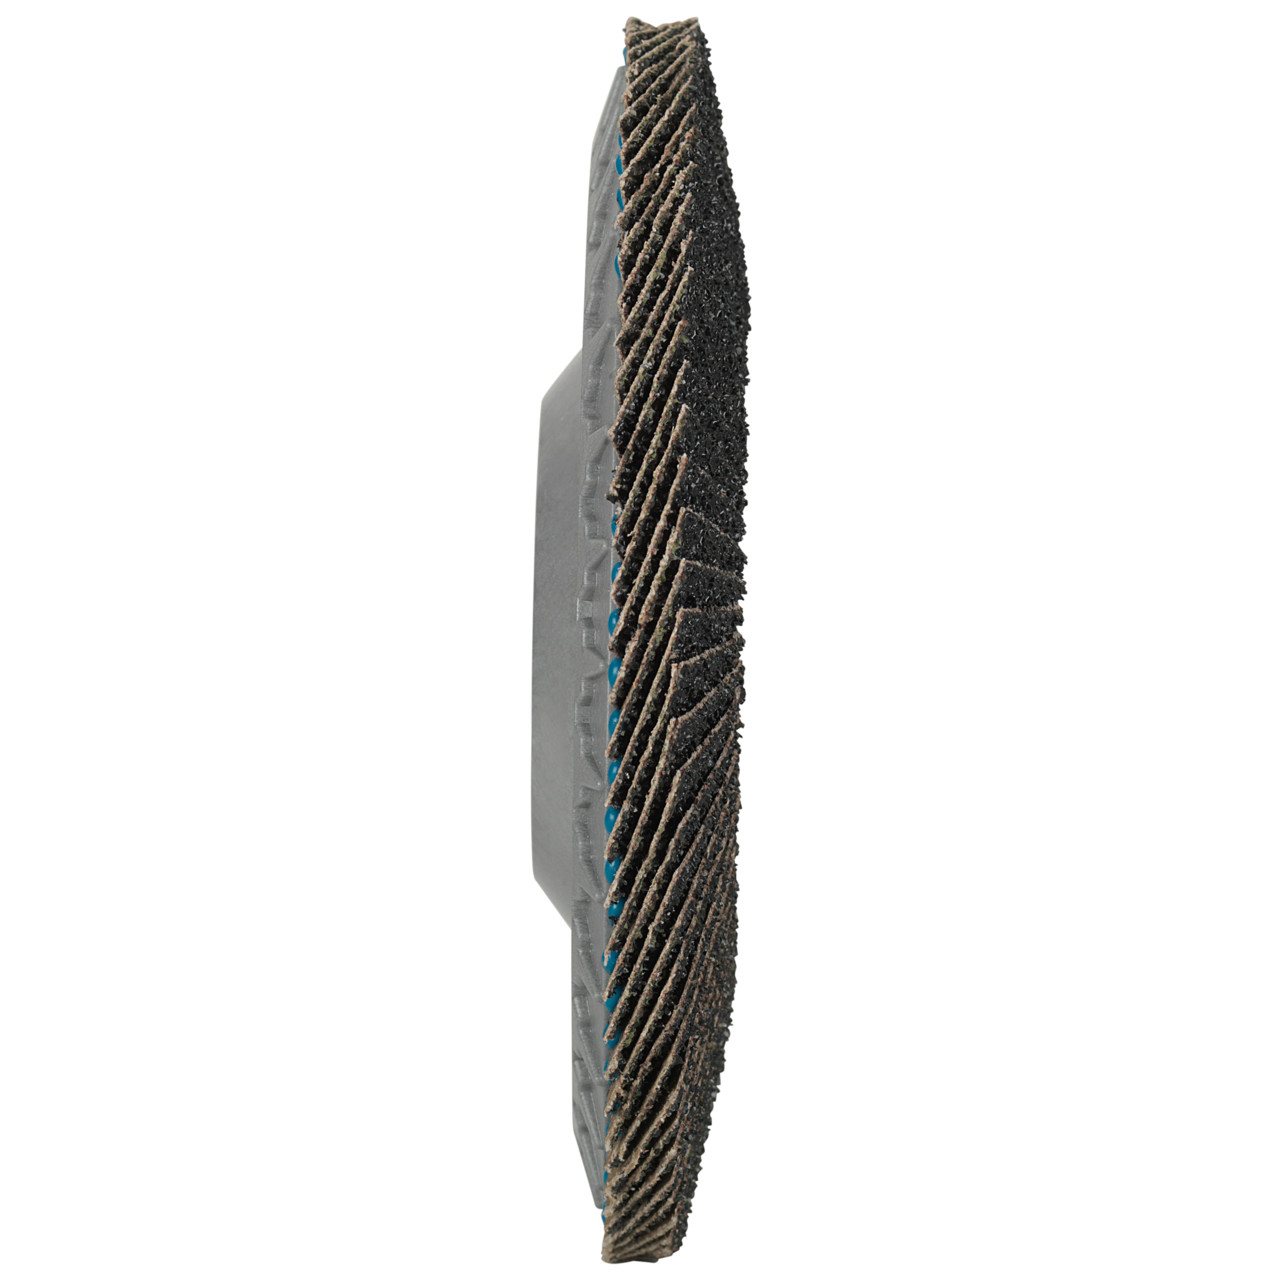 Rondella dentata Tyrolit DxH 178x22.23 LONGLIFE C-TRIM per acciaio e acciaio inox, P120, forma: 28N - versione diritta (corpo portante in plastica), Art. 34239222